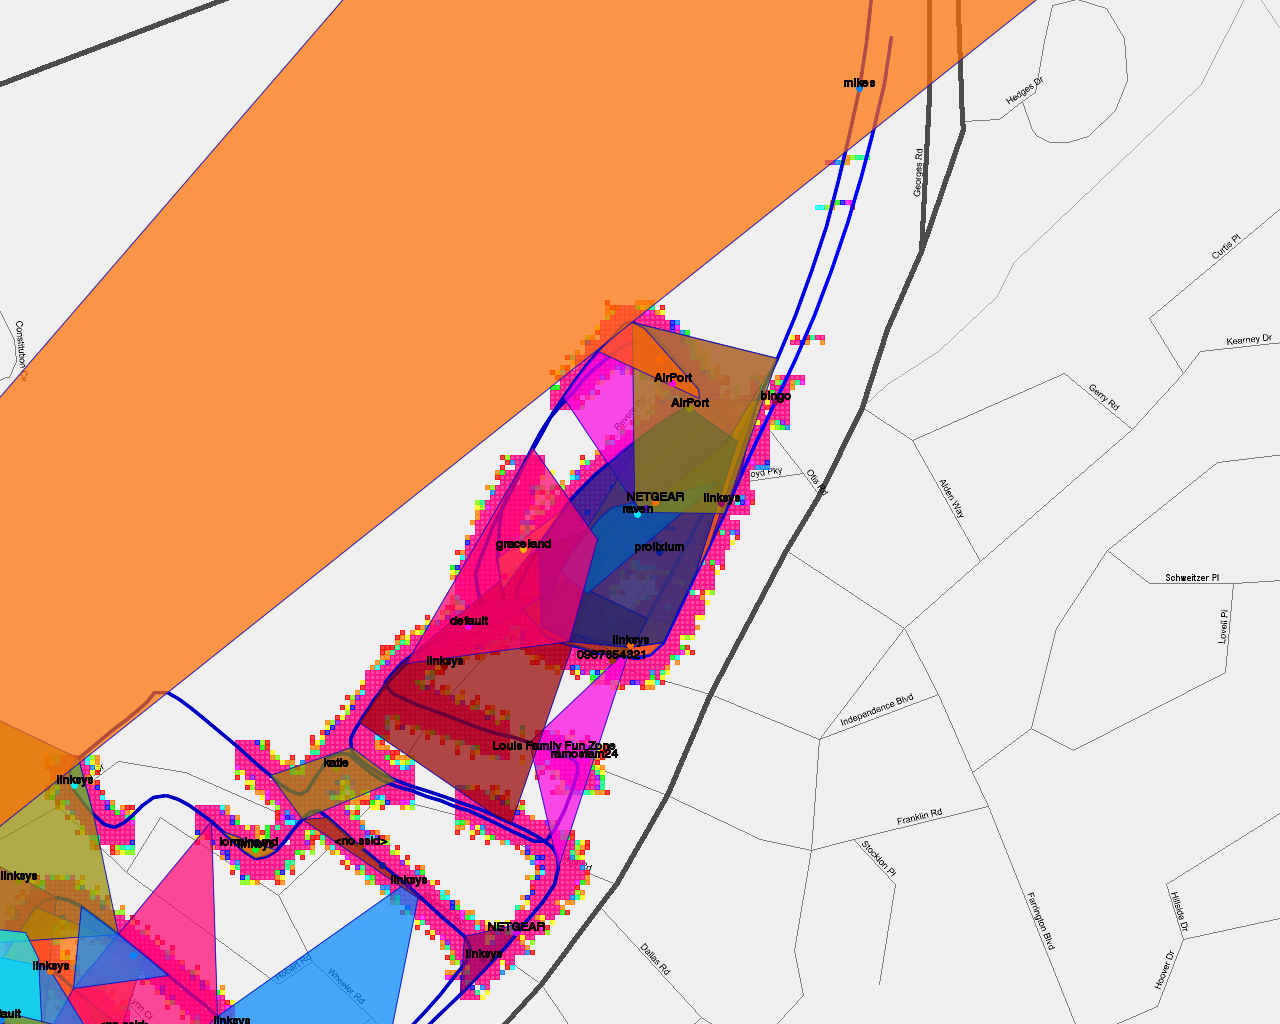 Prolixium Dot Com Projects Wardriving Maps Of New Jersey